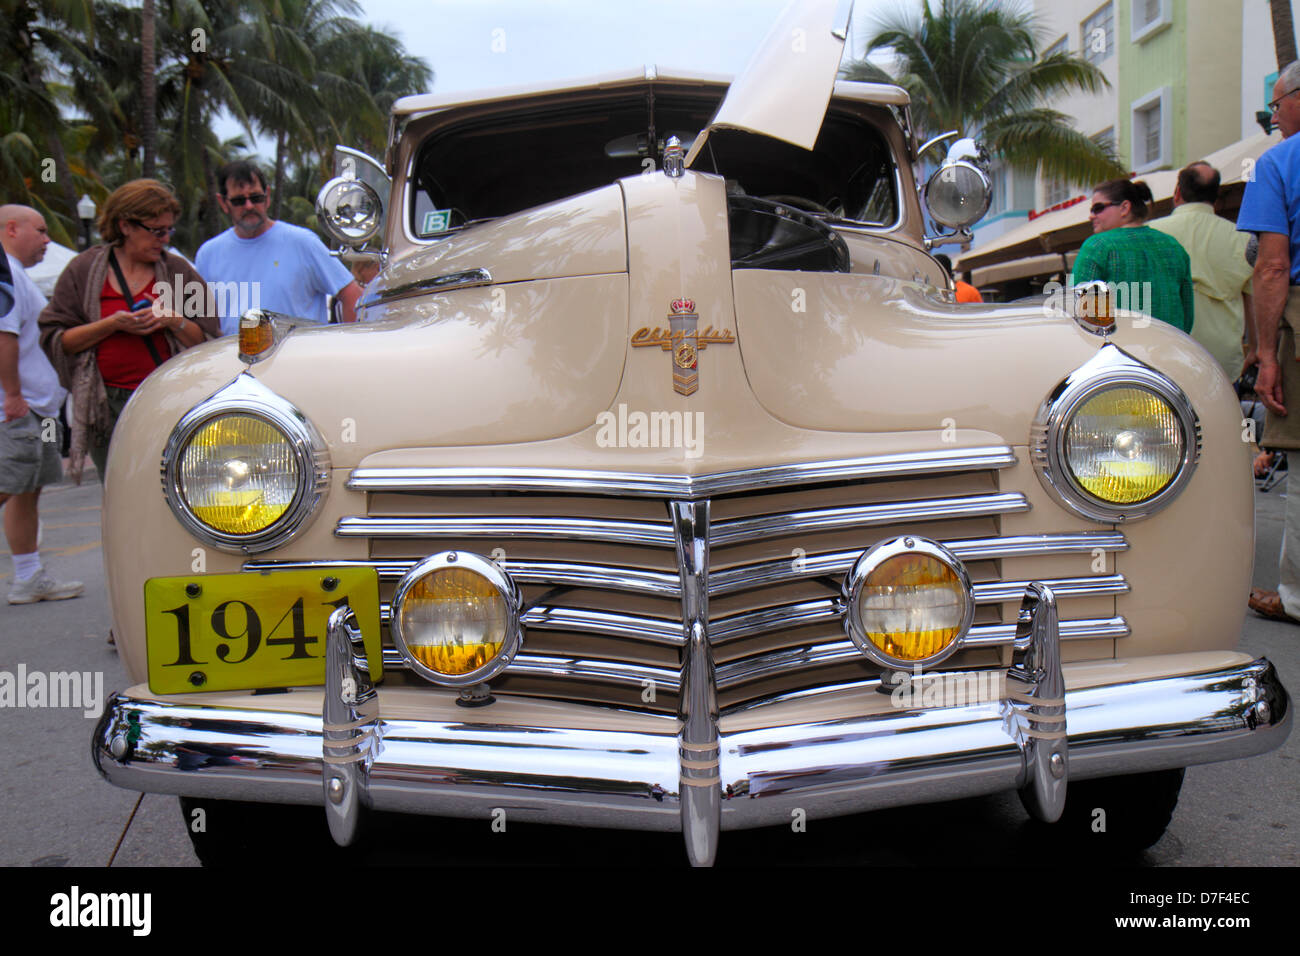 Miami Beach Florida,Ocean Drive,Art Deco Weekend,festival,event,antique,car cars,automobile,auto,vehicle,Chrysler,1941,front,grille,chrome bumper,visi Stock Photo